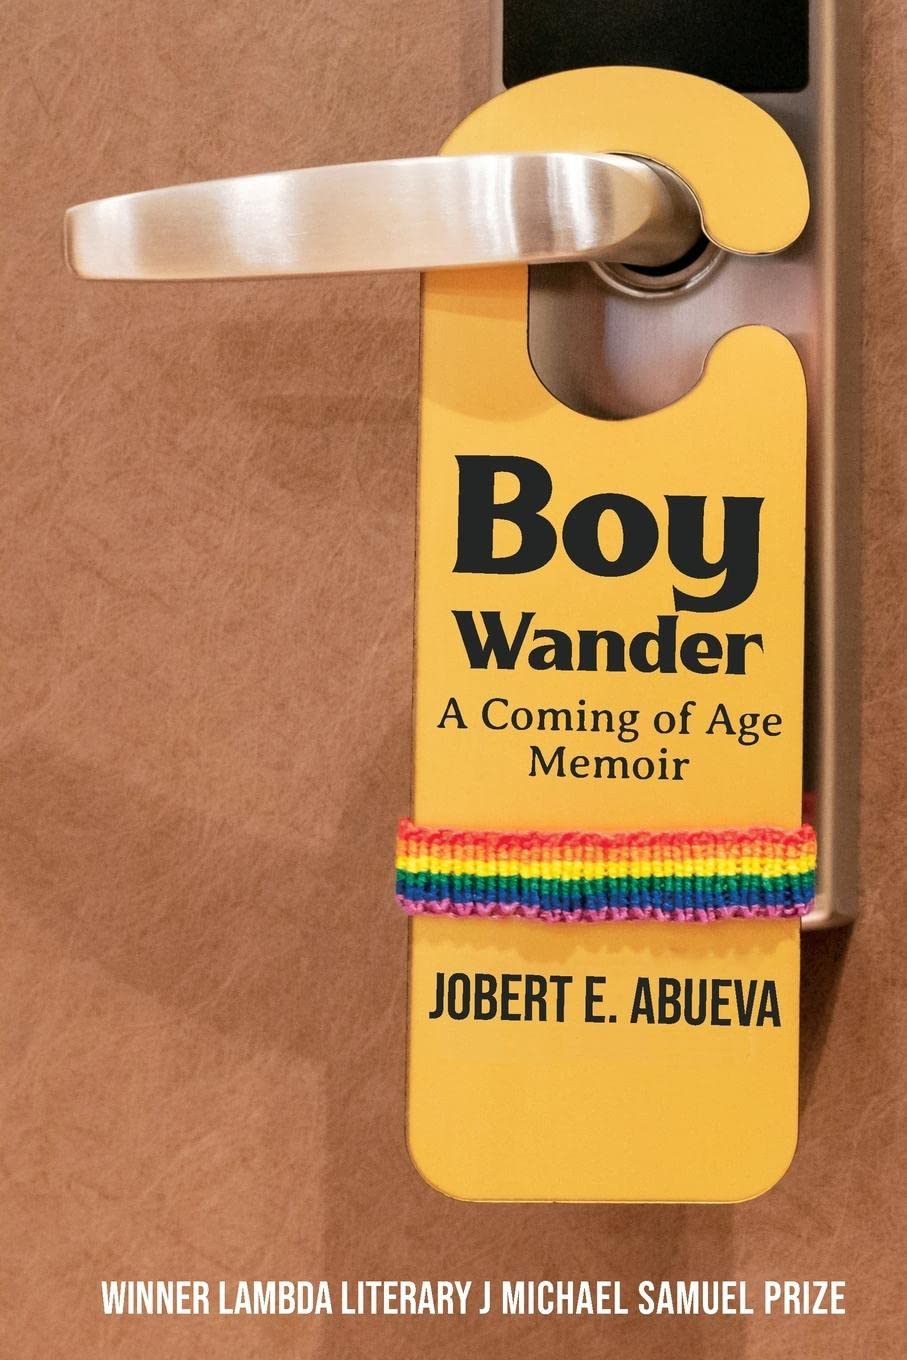 Boy Wander – A Coming of Age Memoir